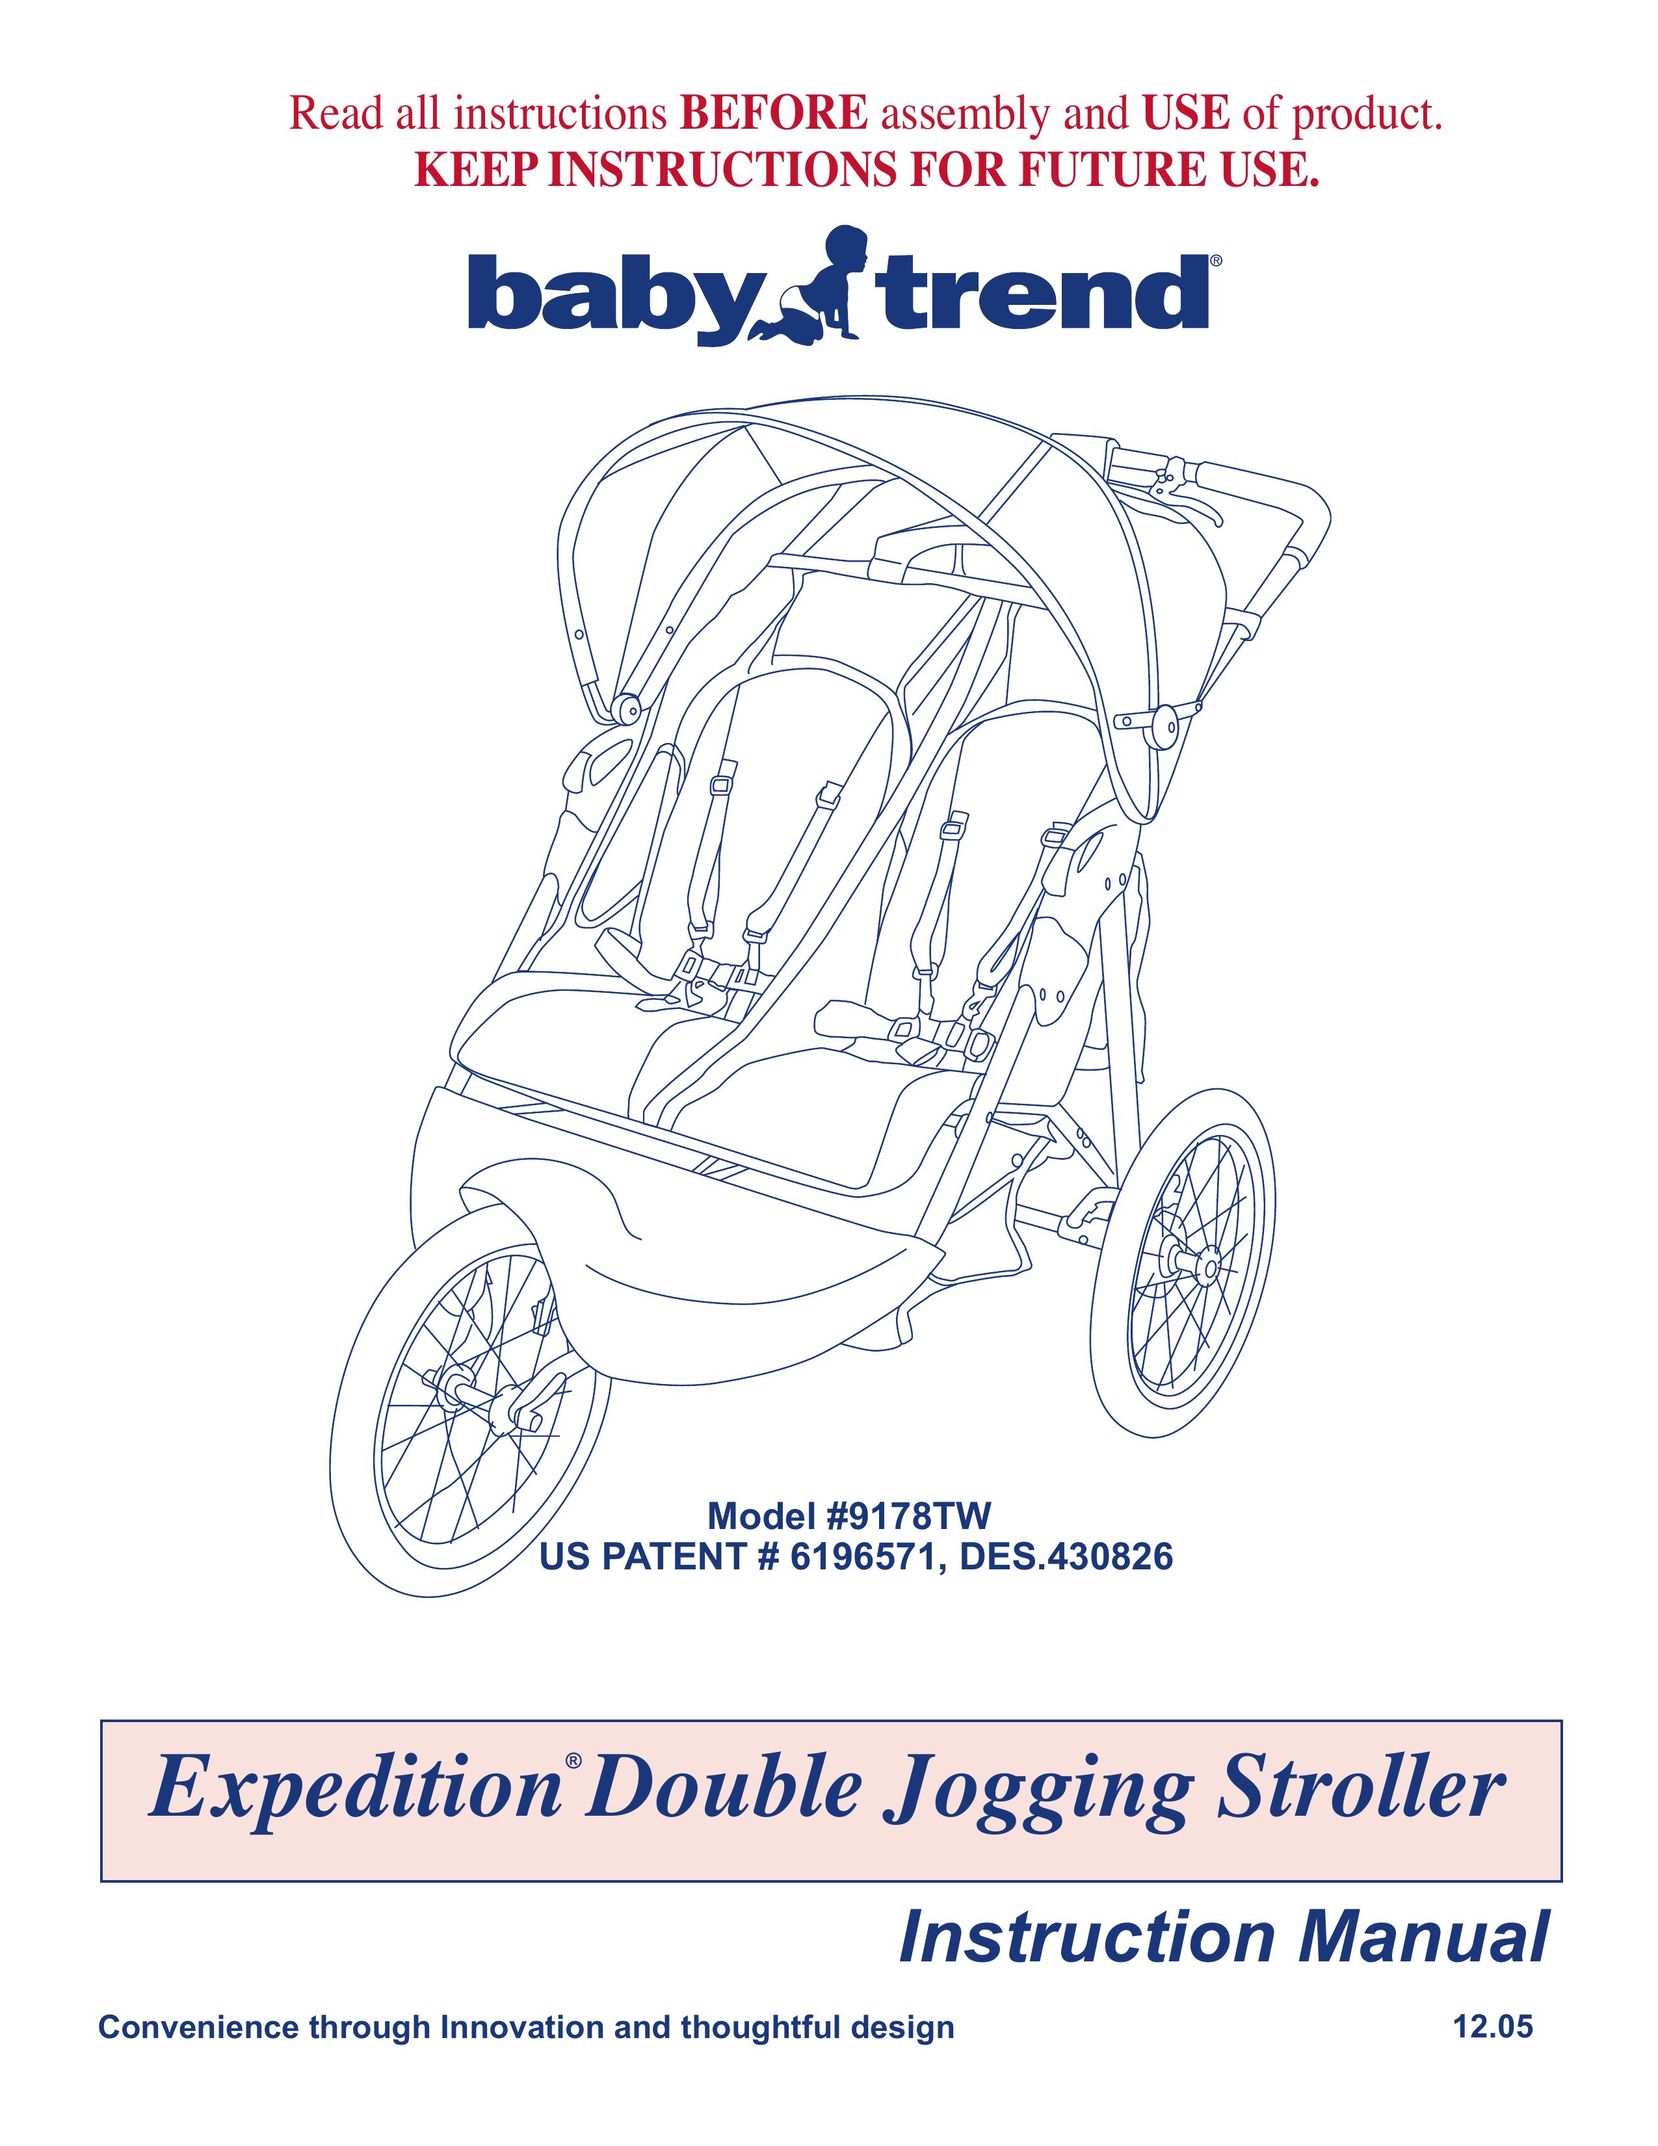 Baby Trend 9178TW Stroller User Manual